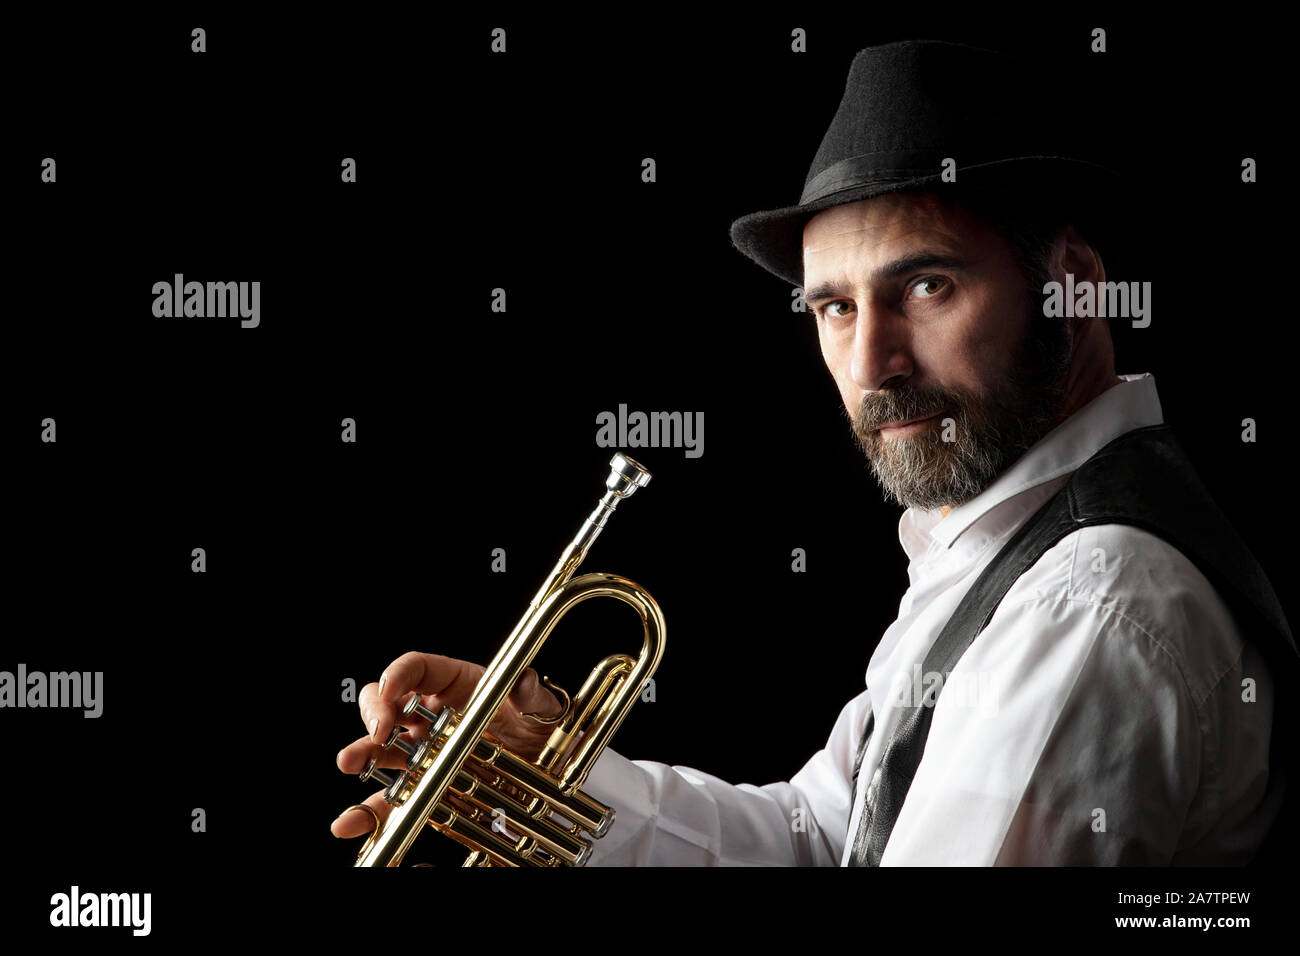 trumpet man with beard portrait on black background Stock Photo